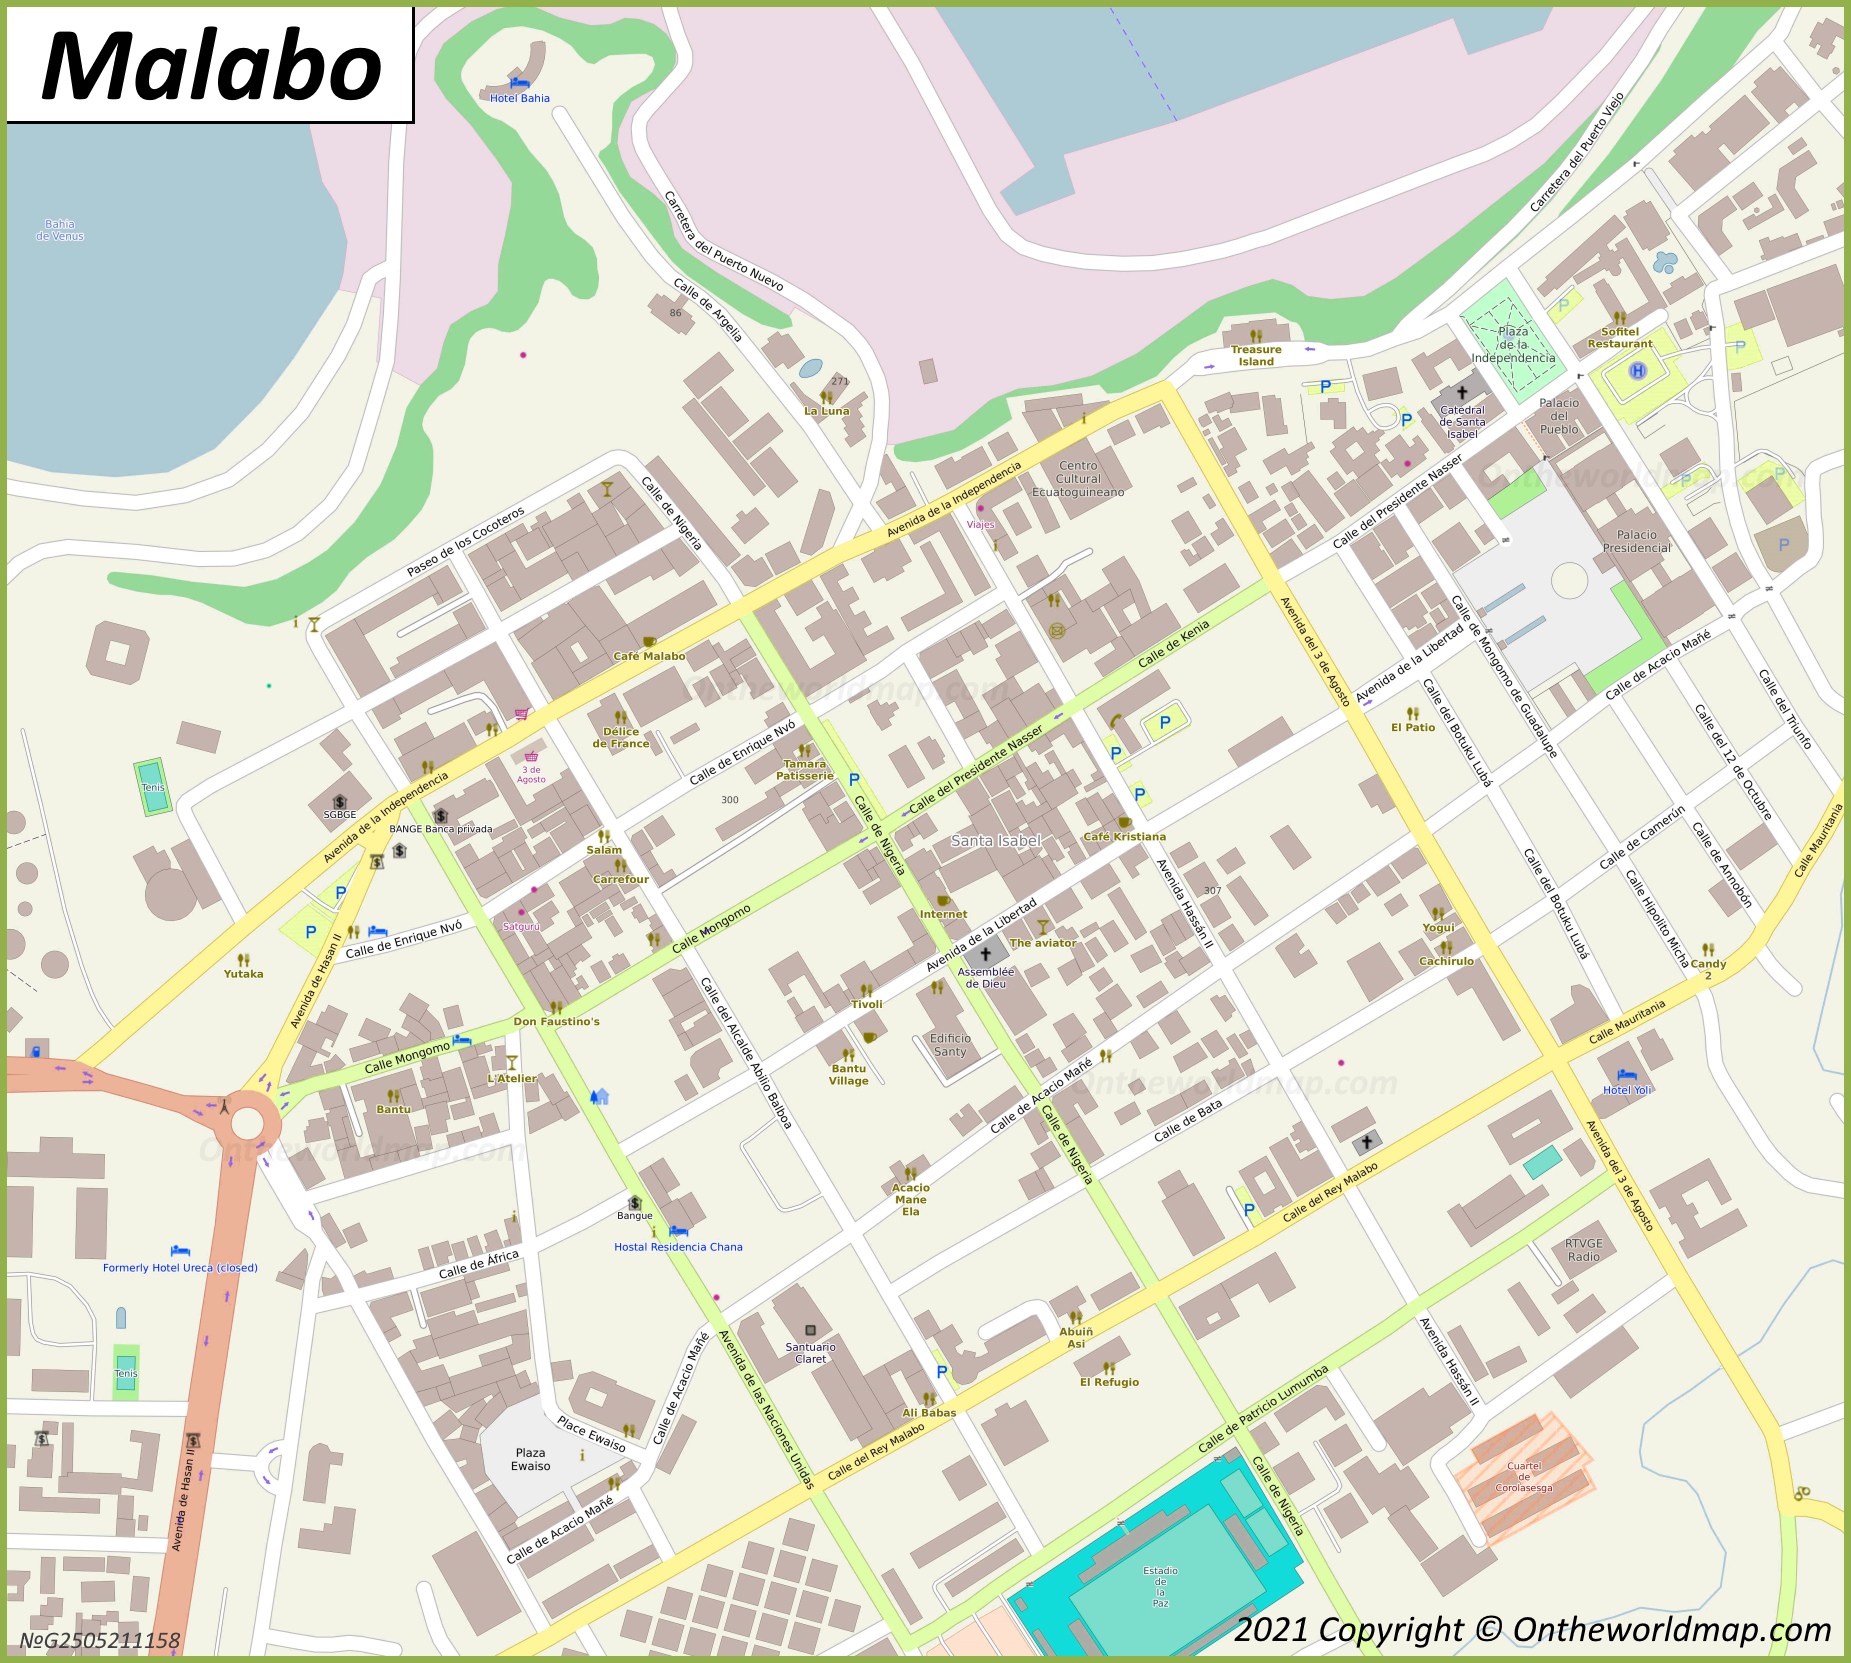 Malabo City Center Map